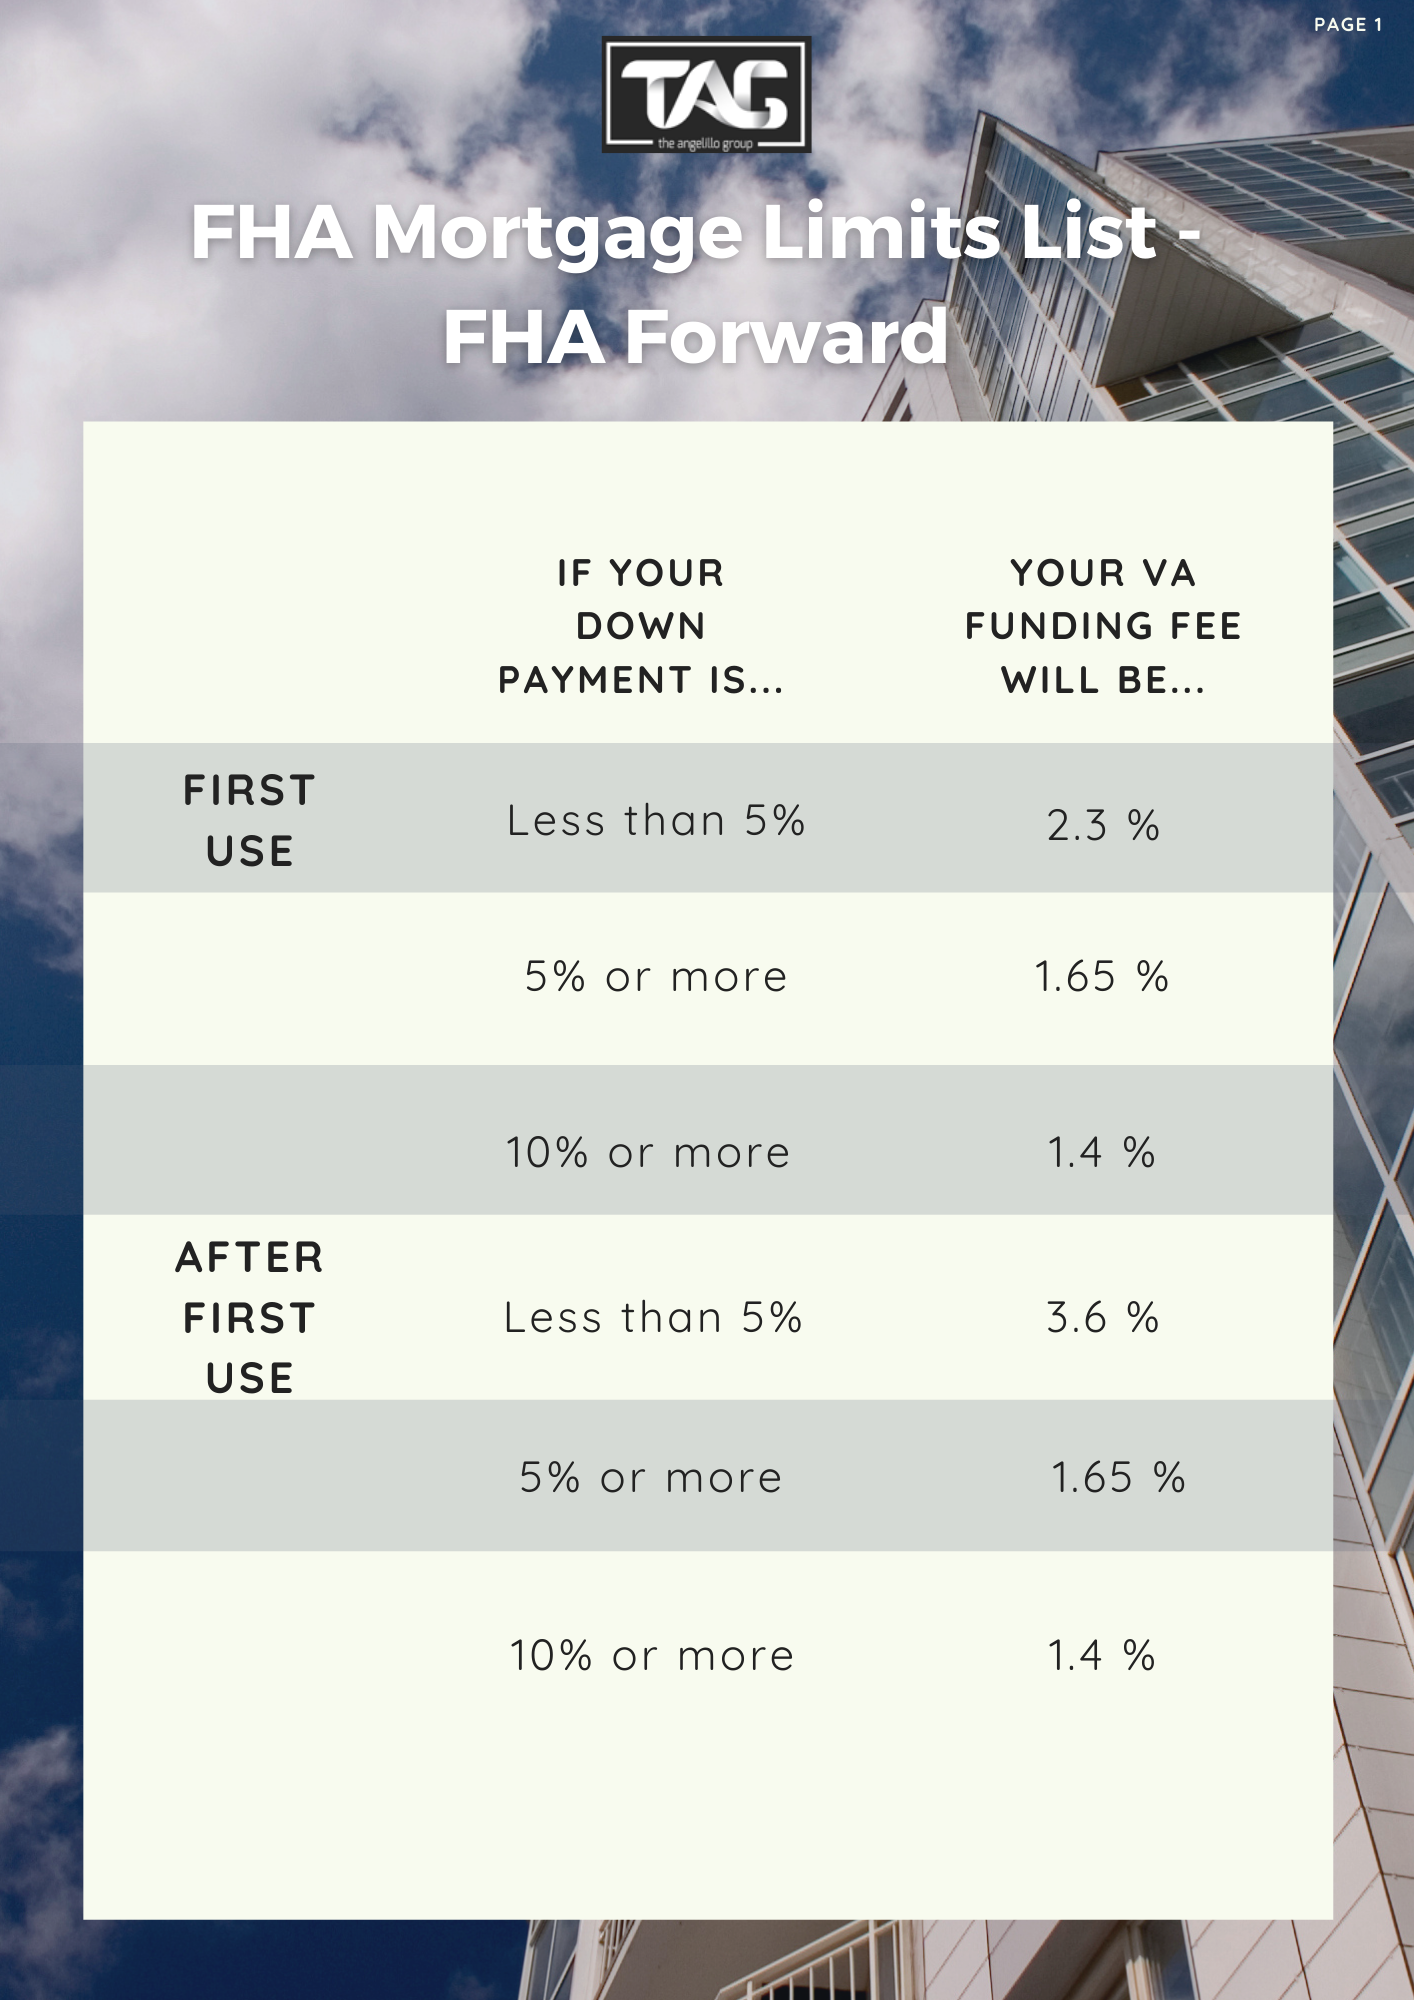 FHA Mortgage Limits List - FHA Forward (1)